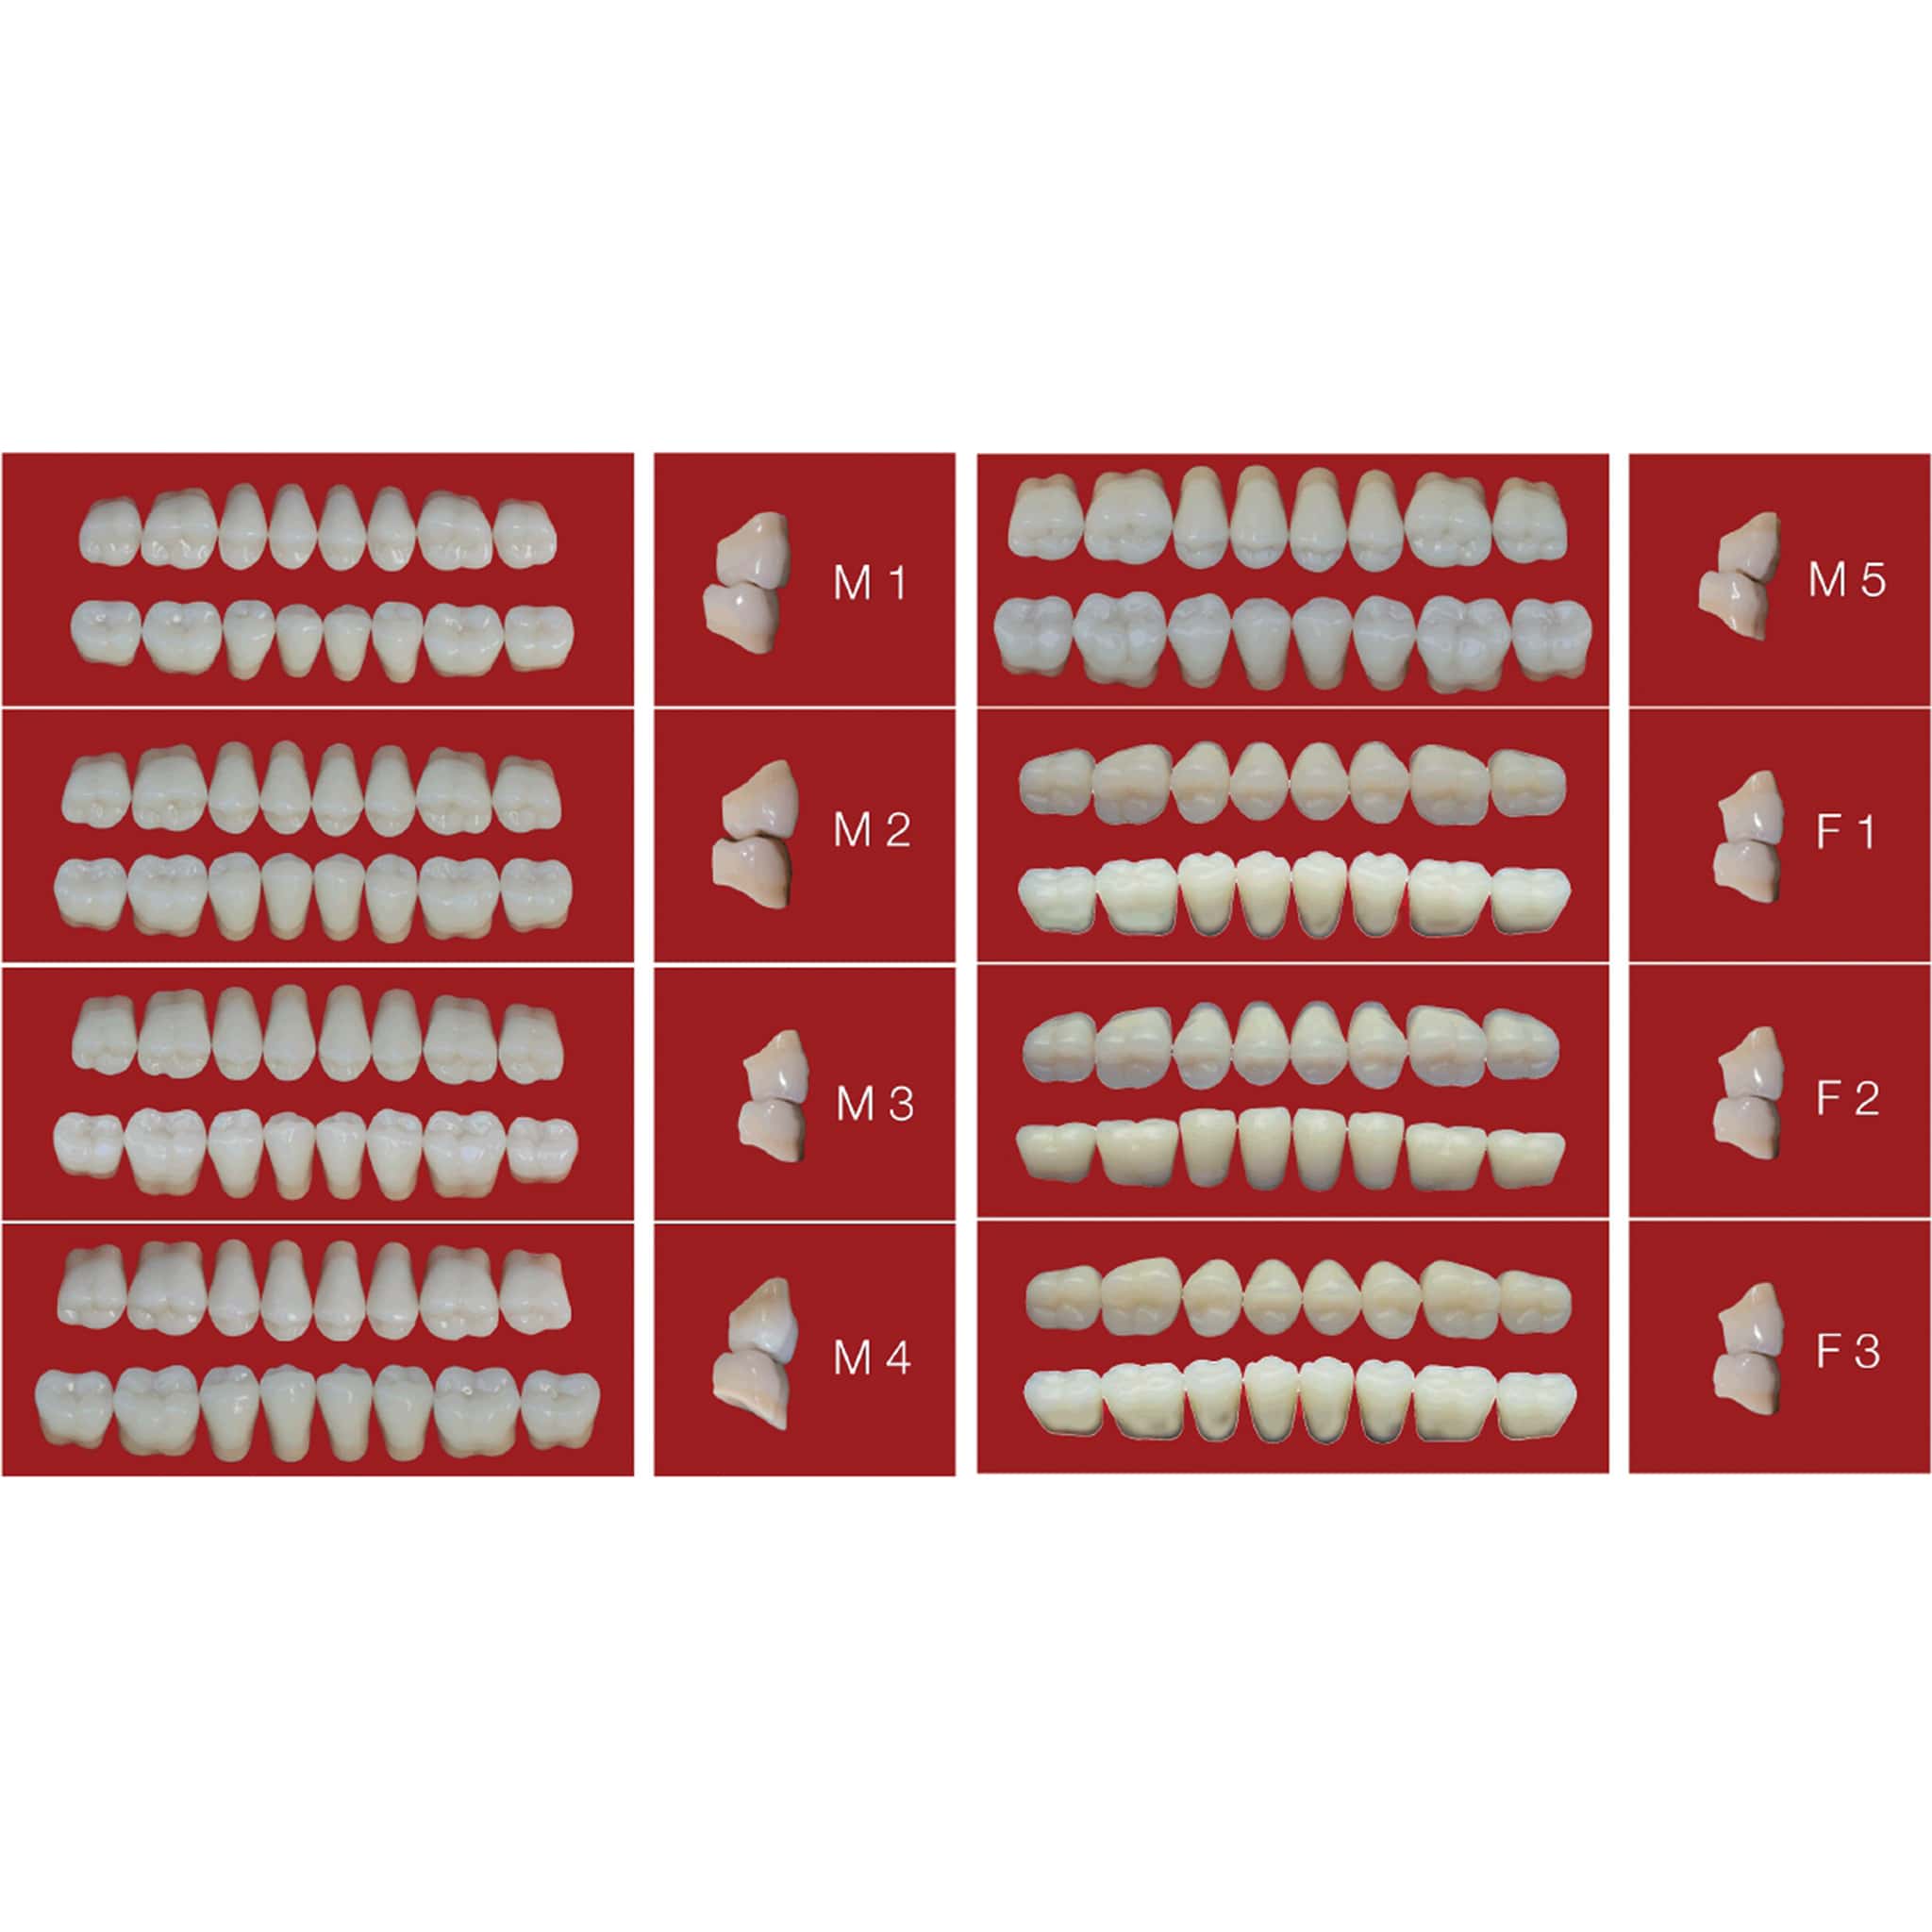 MR Dental Medi-Lux Full Set A4 Shade (Box of 4)